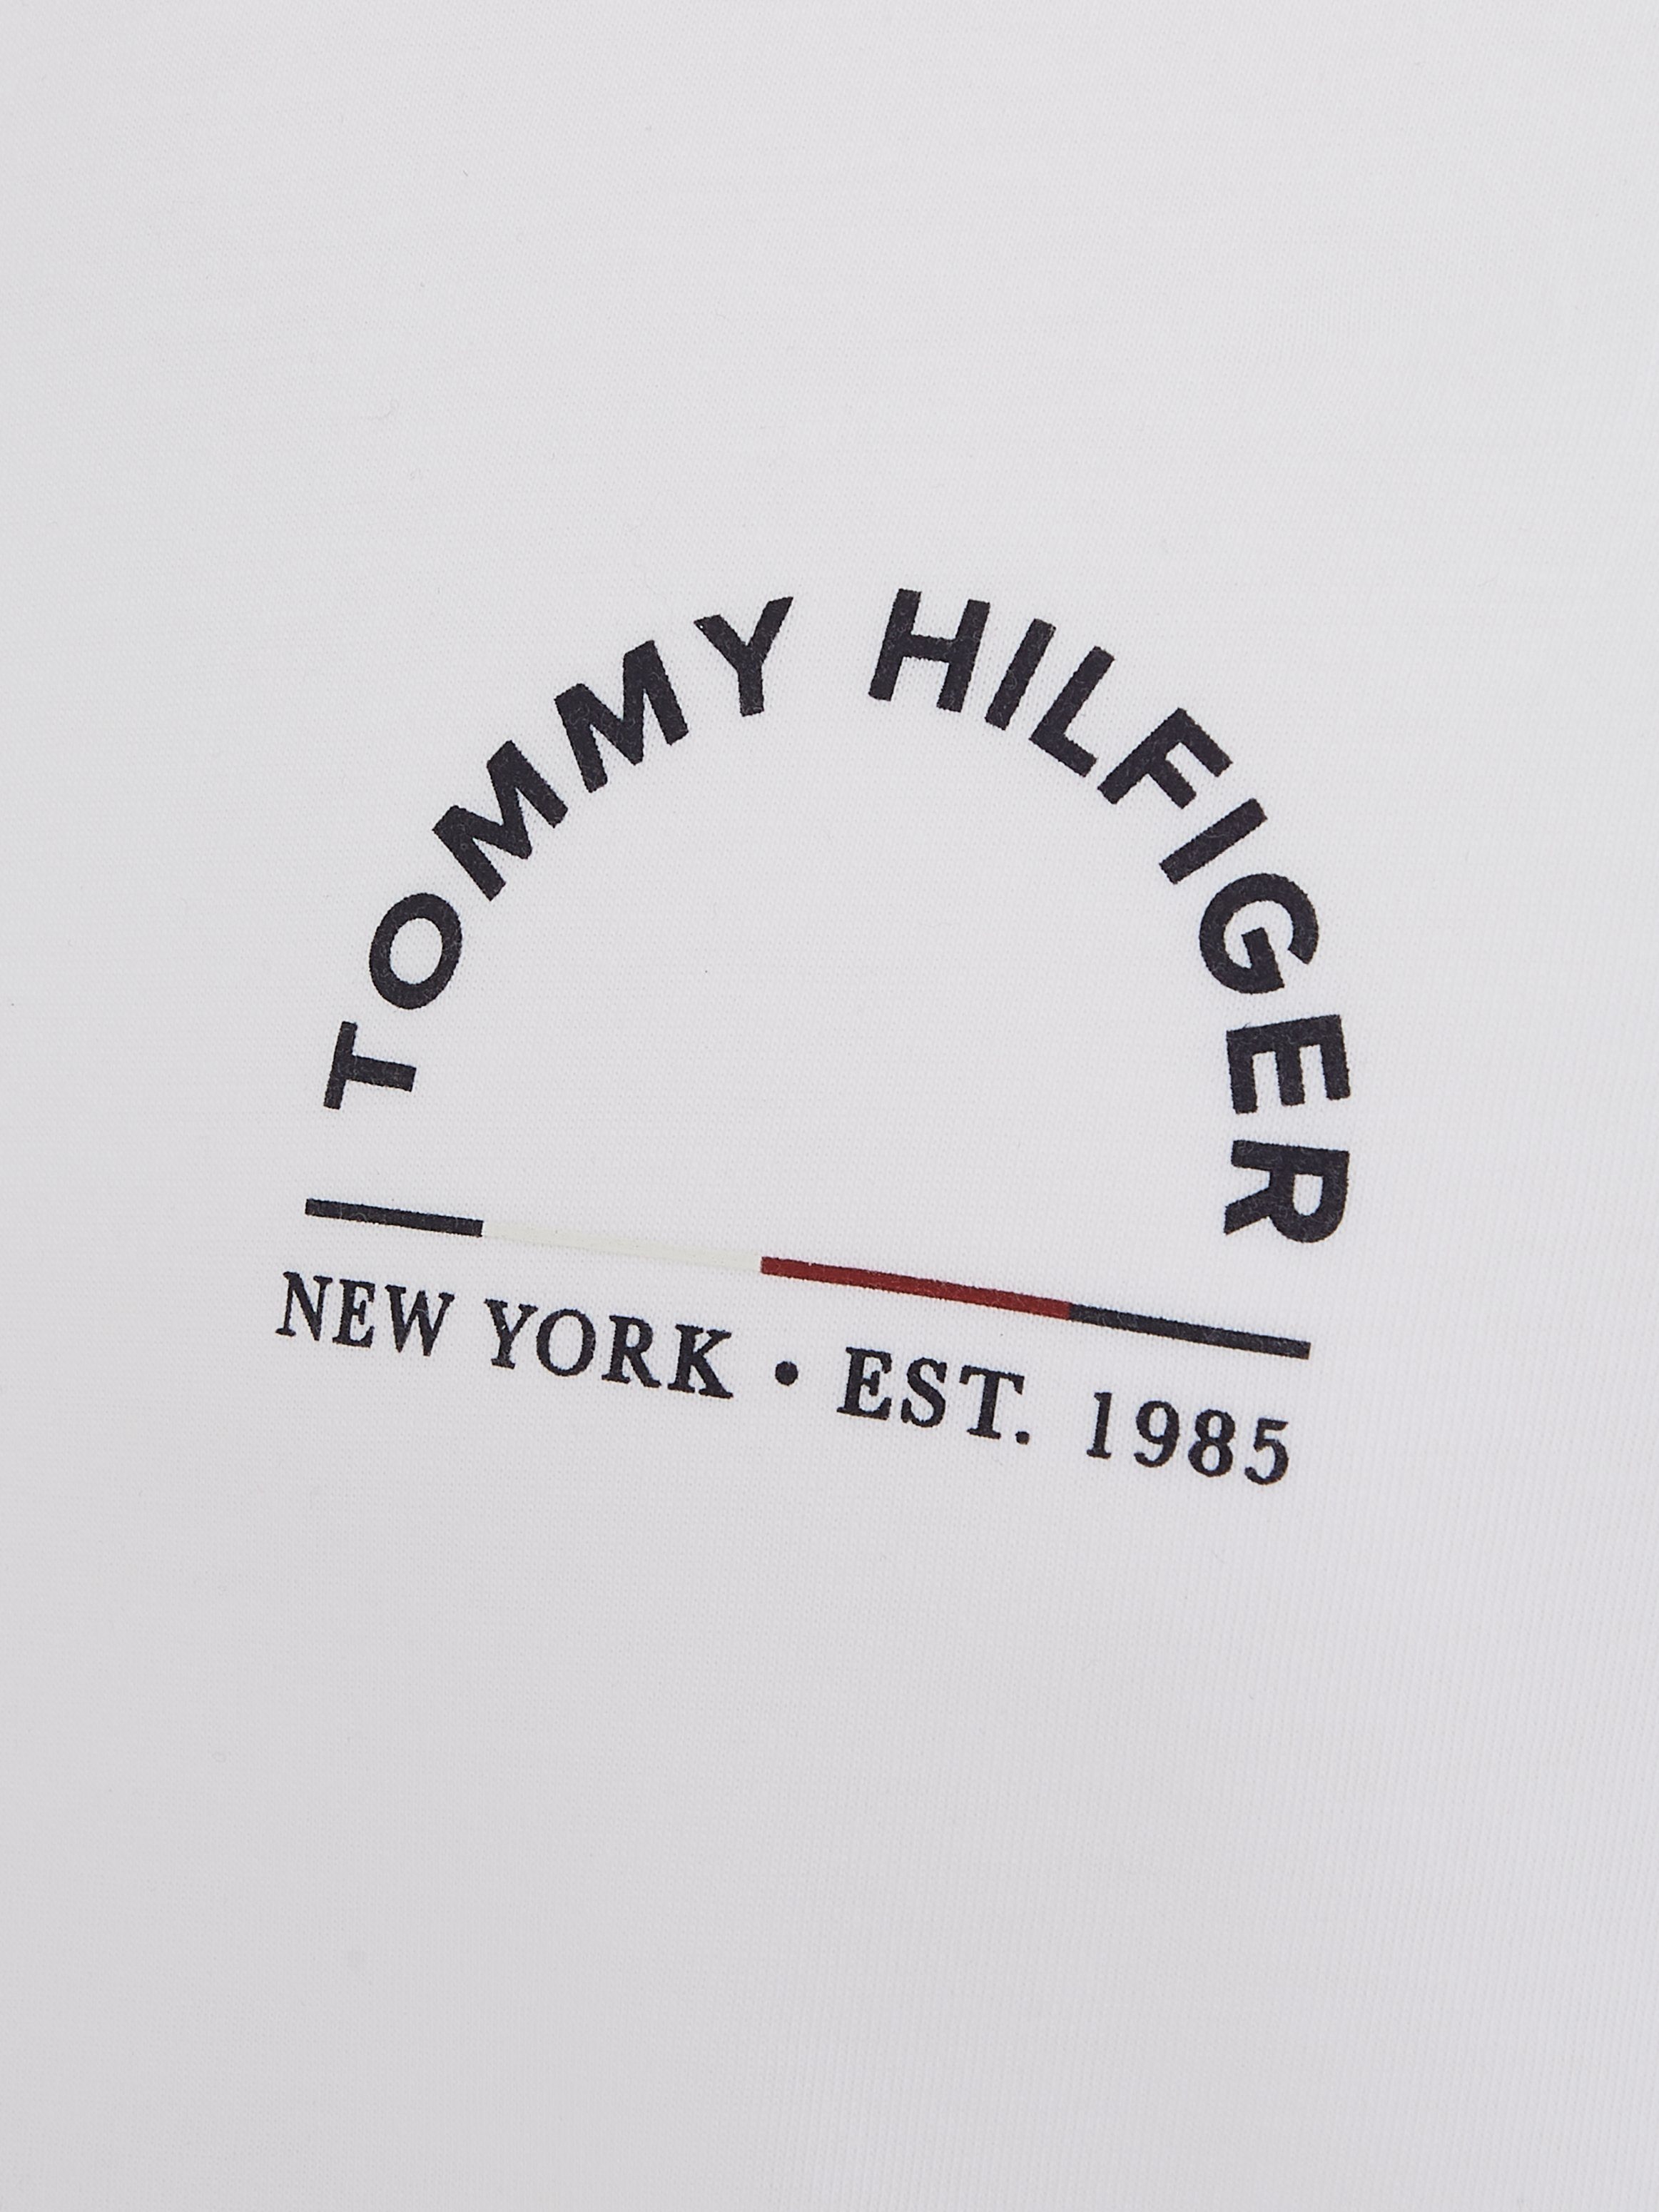 Tommy Hilfiger T-Shirt SHADOW HILFIGER REG Th TEE Optic White